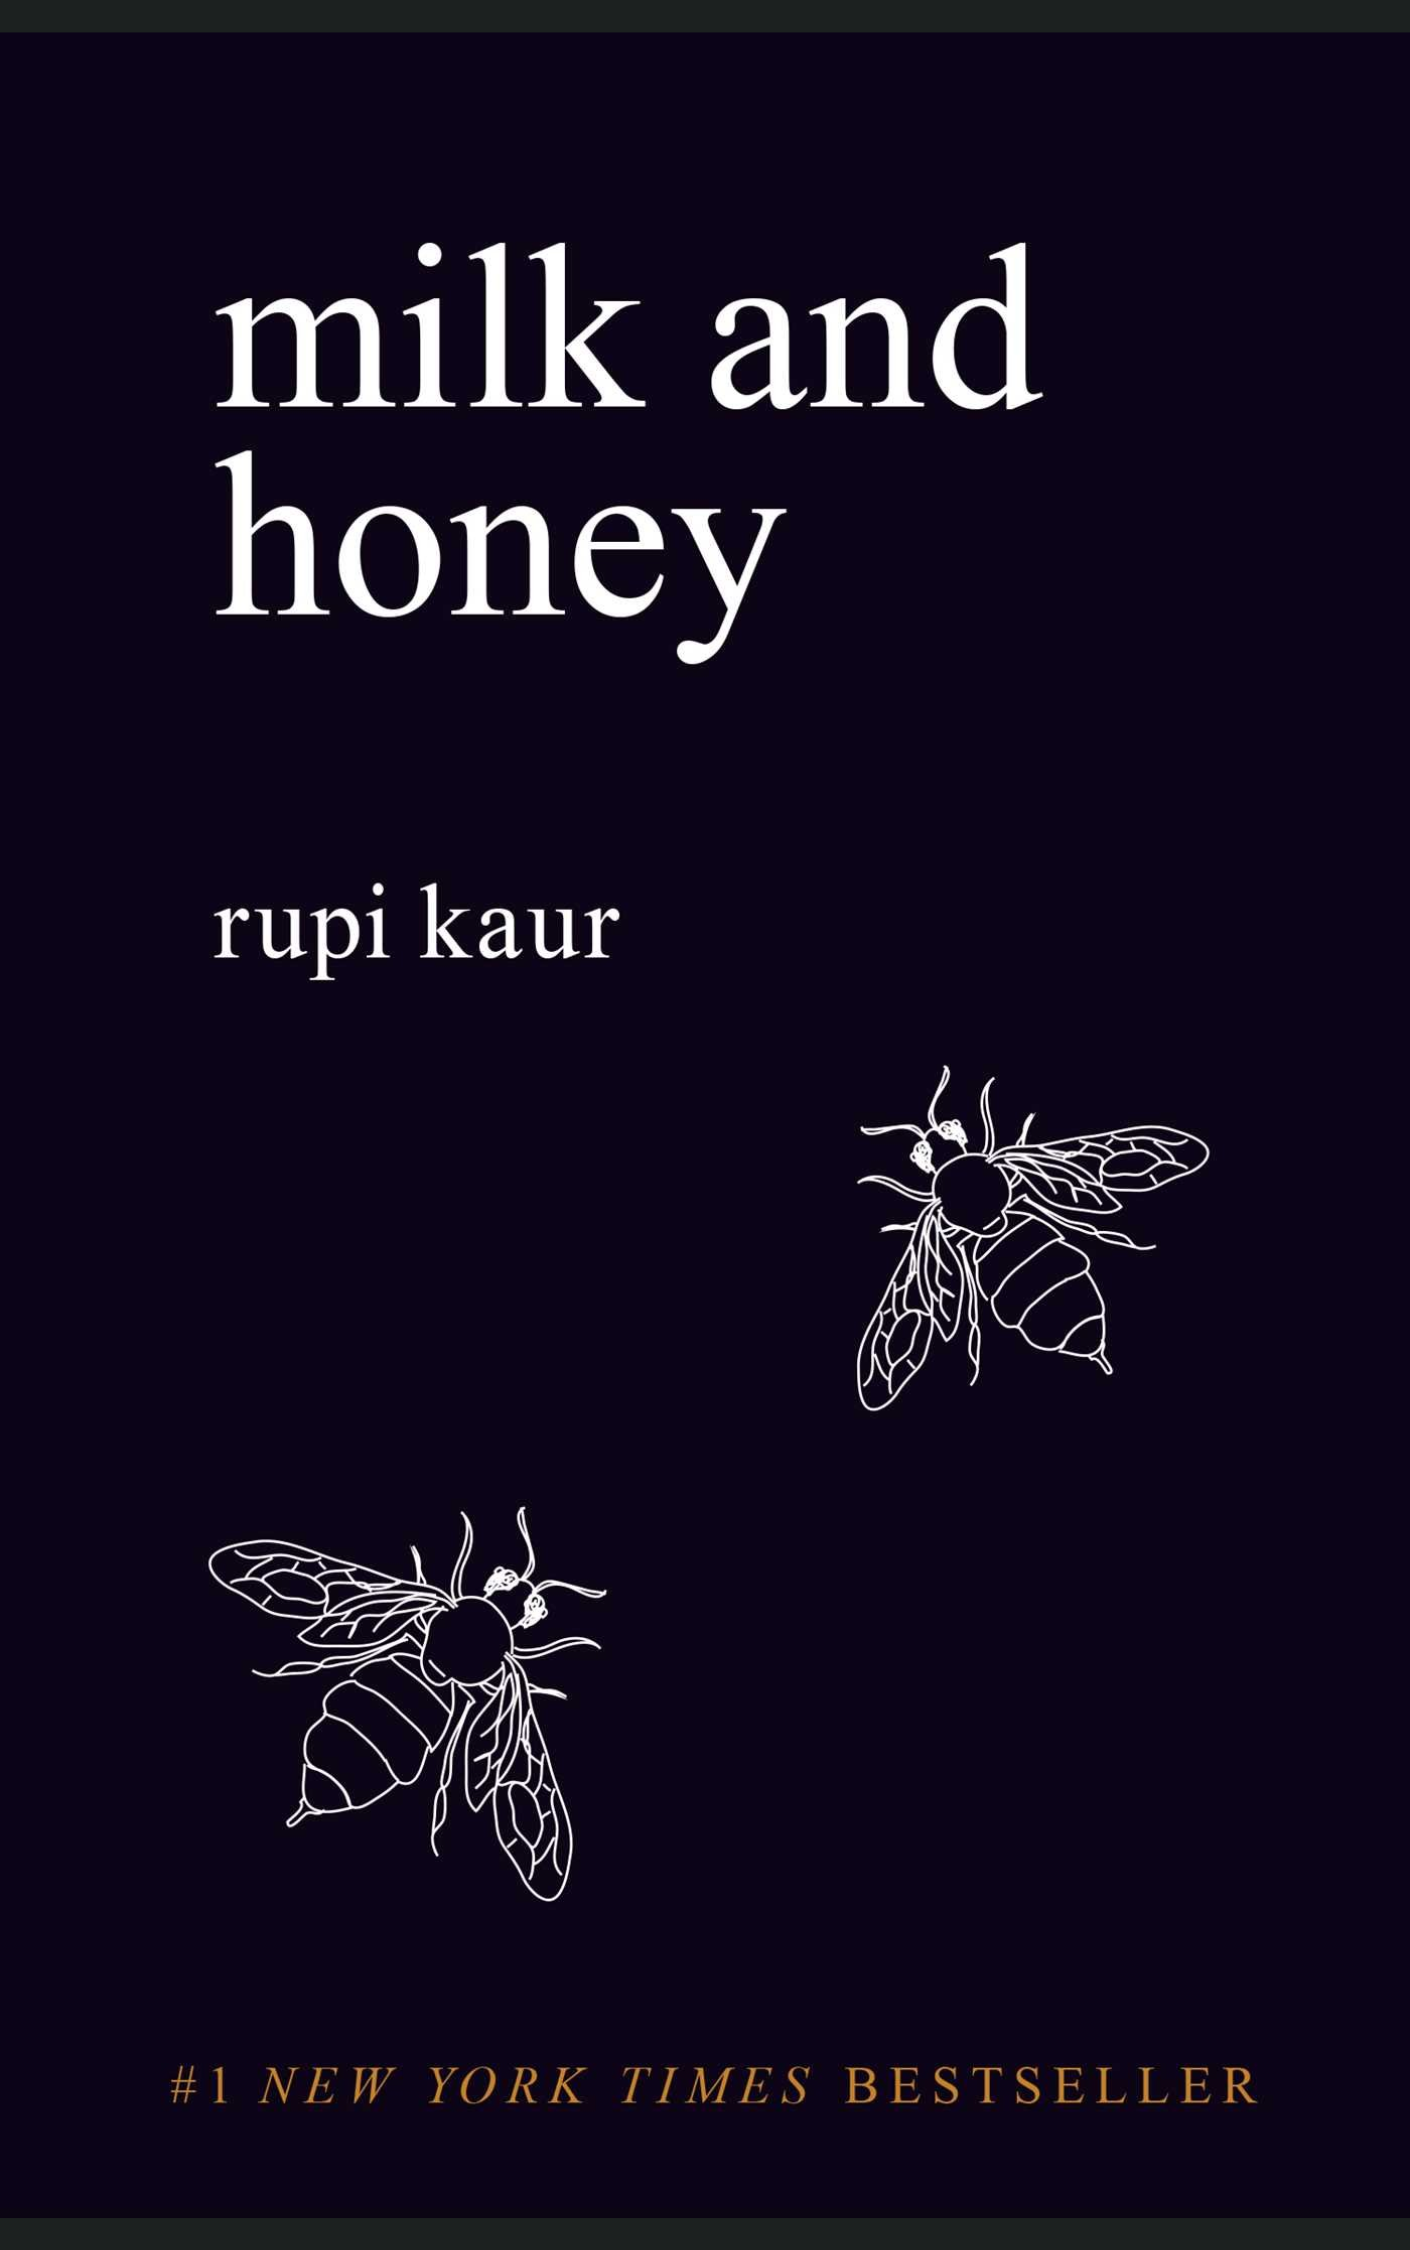 MILK AND HONEY by RUPI KAUR